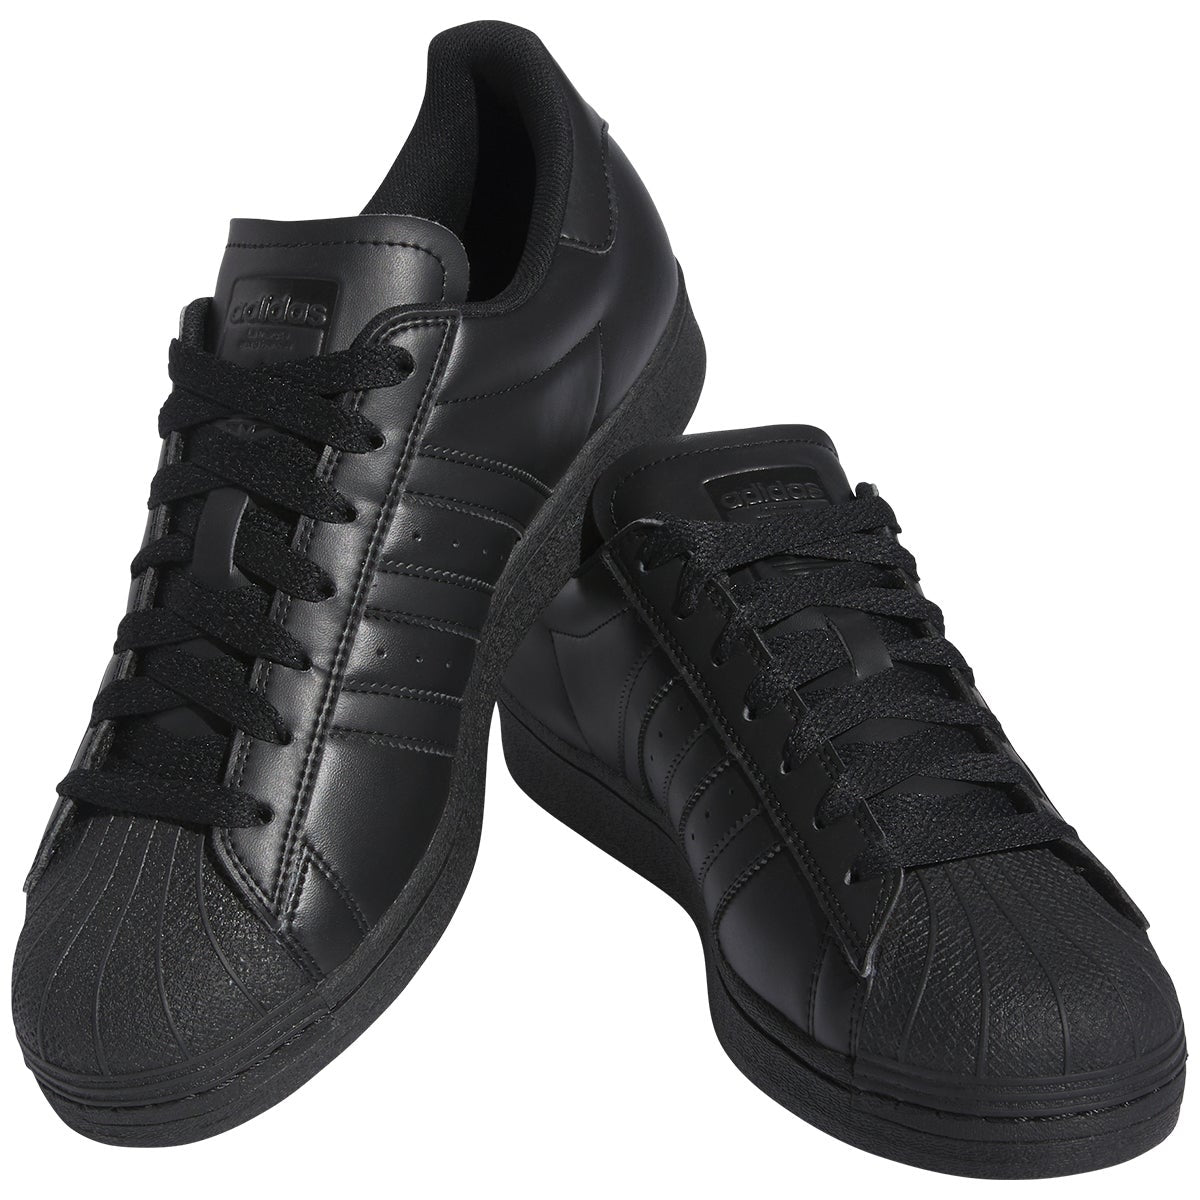 Nice Shoes  Adidas adidas superstar noir or or noir